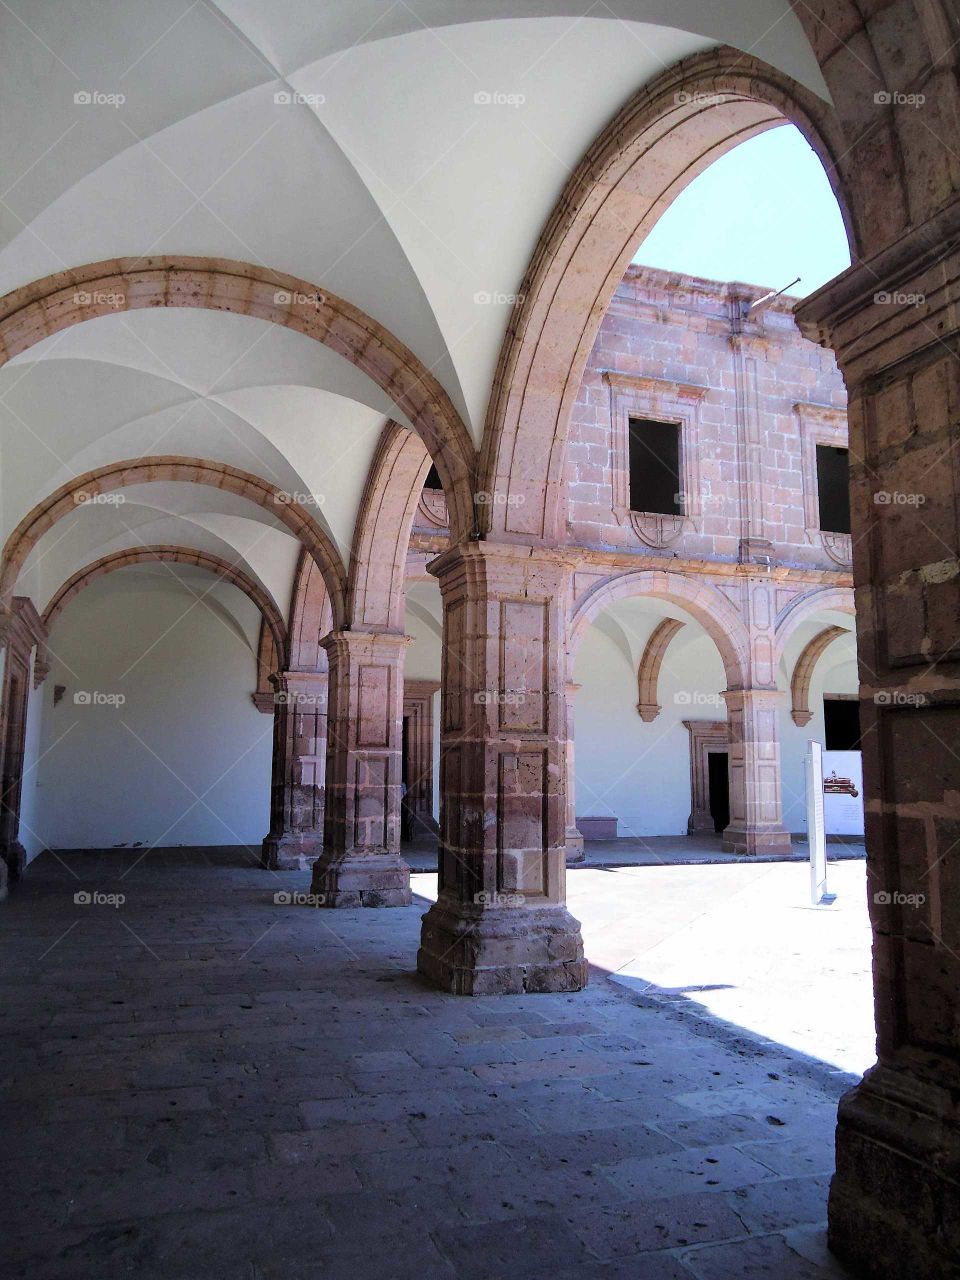 archways around a courtyard in Mexico